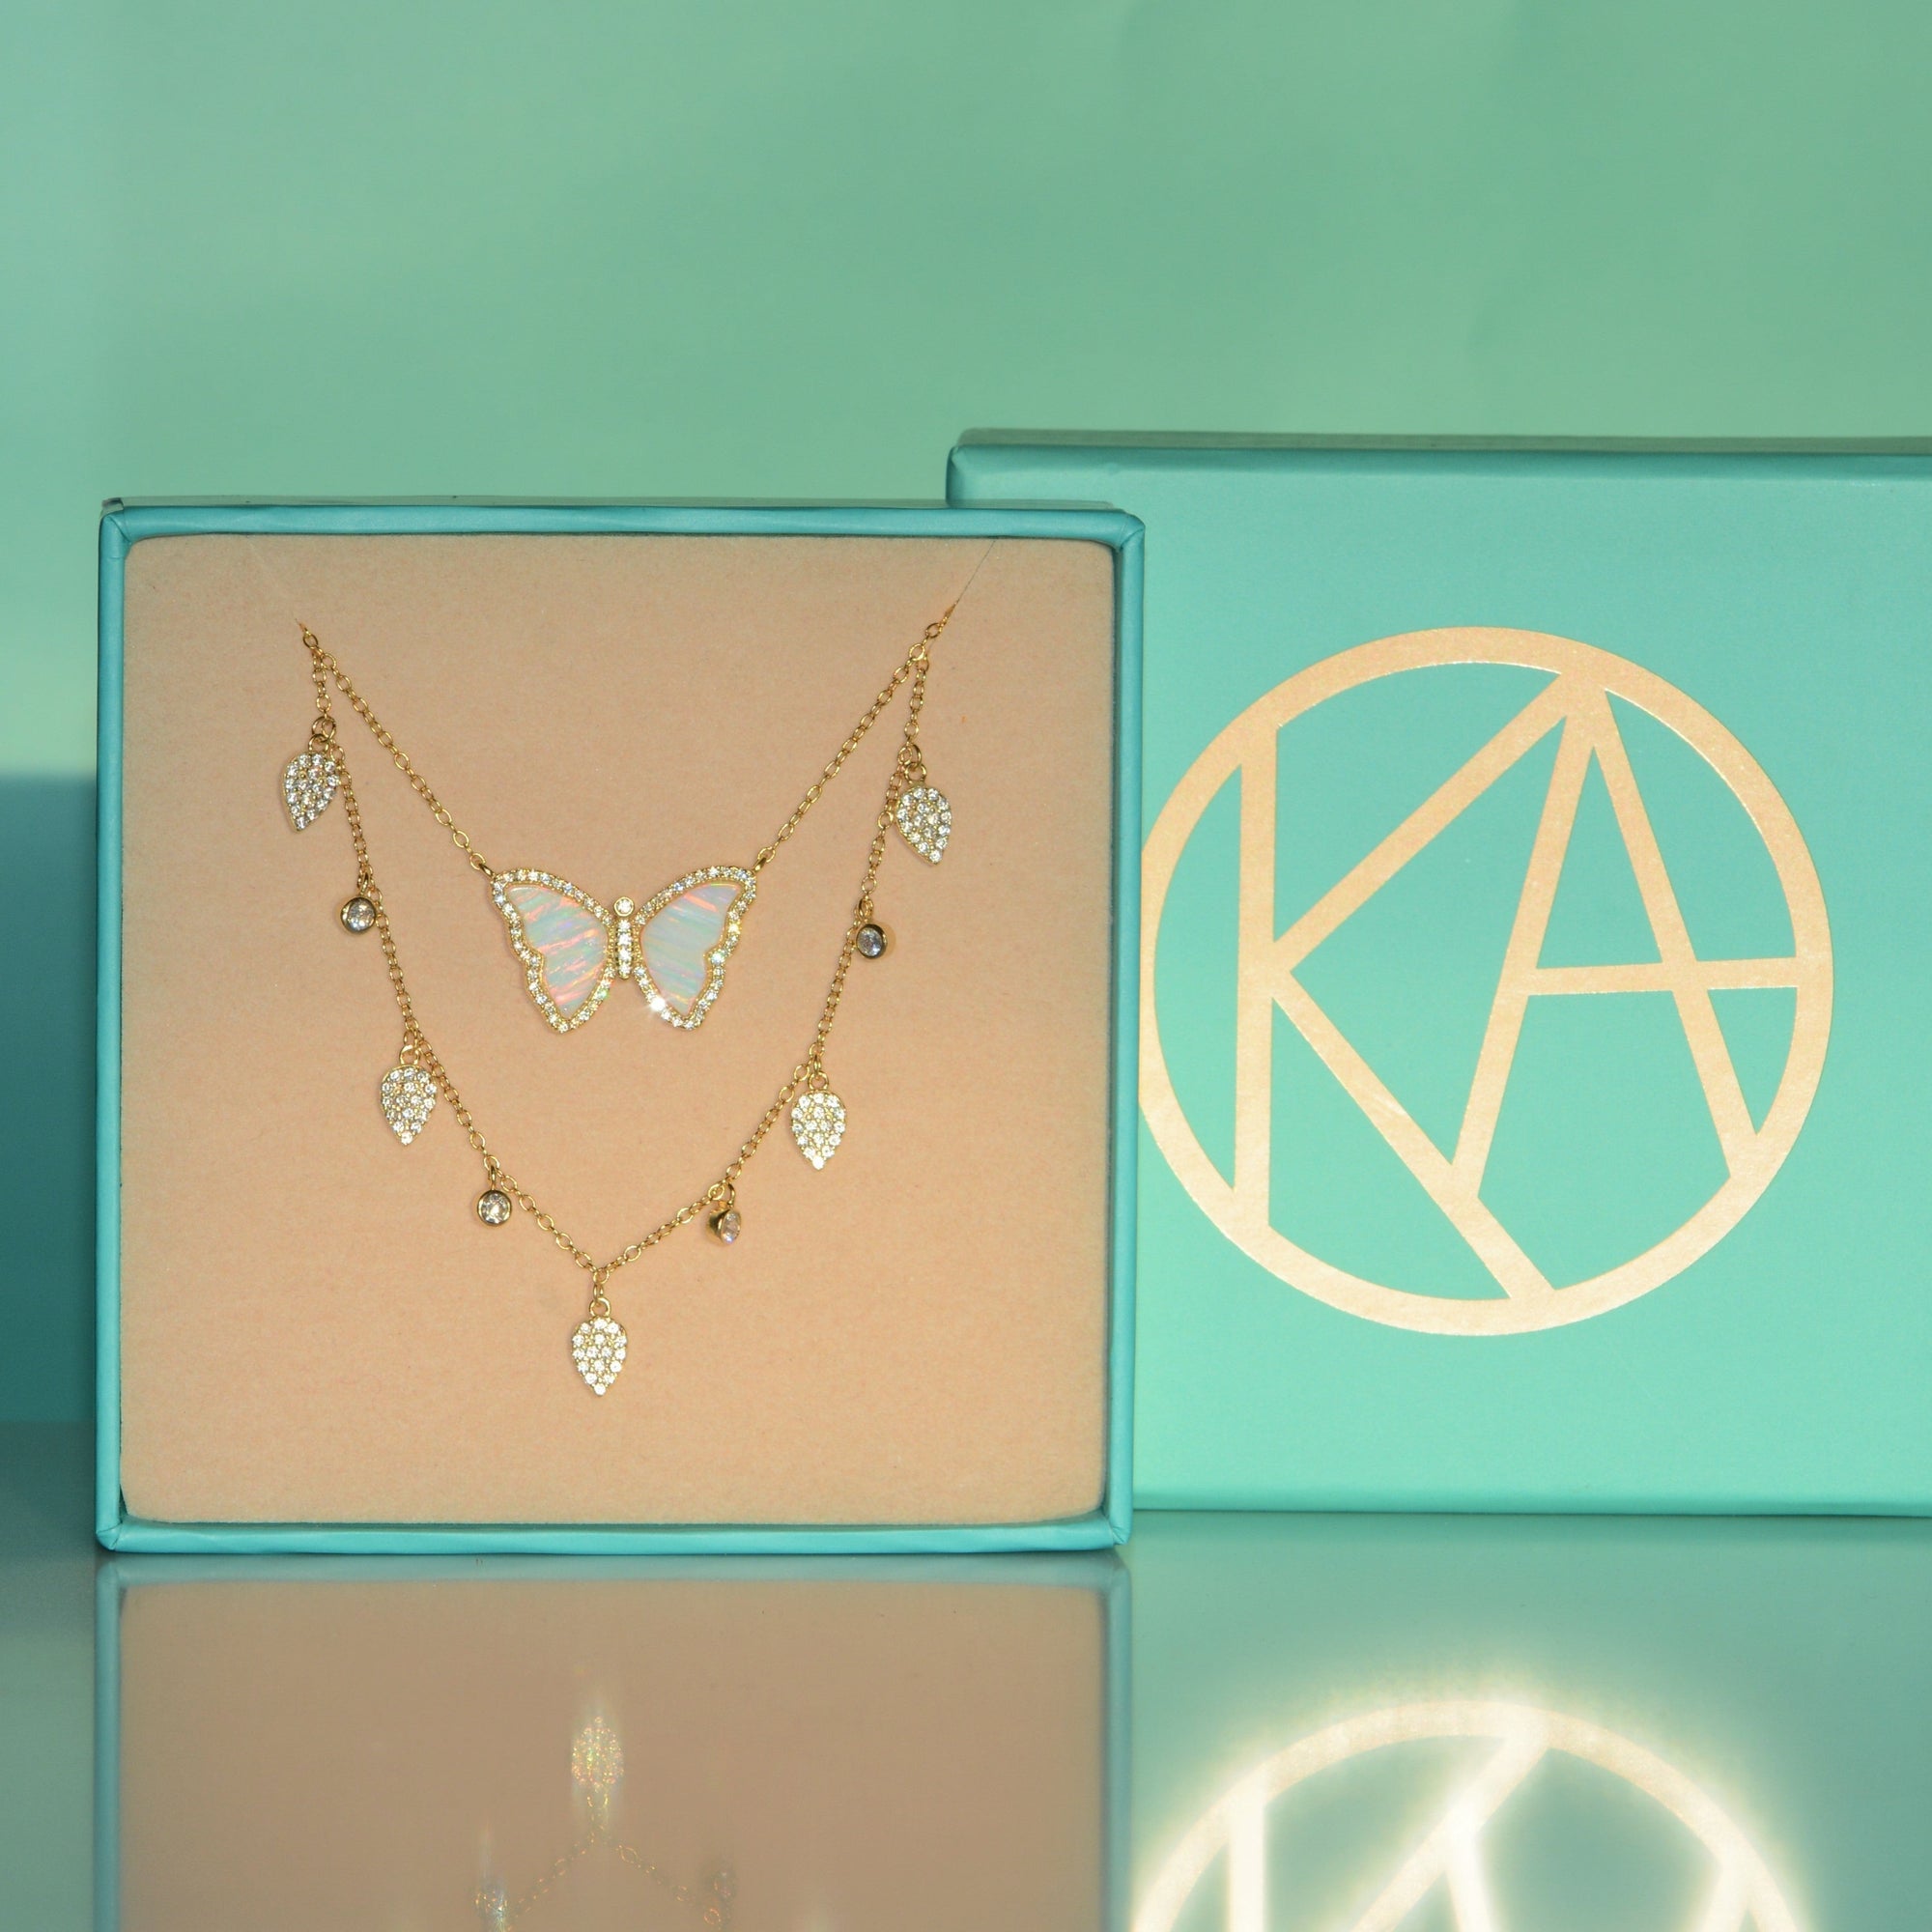 Gift Set | Opal Butterfly Necklace + Gold Choker